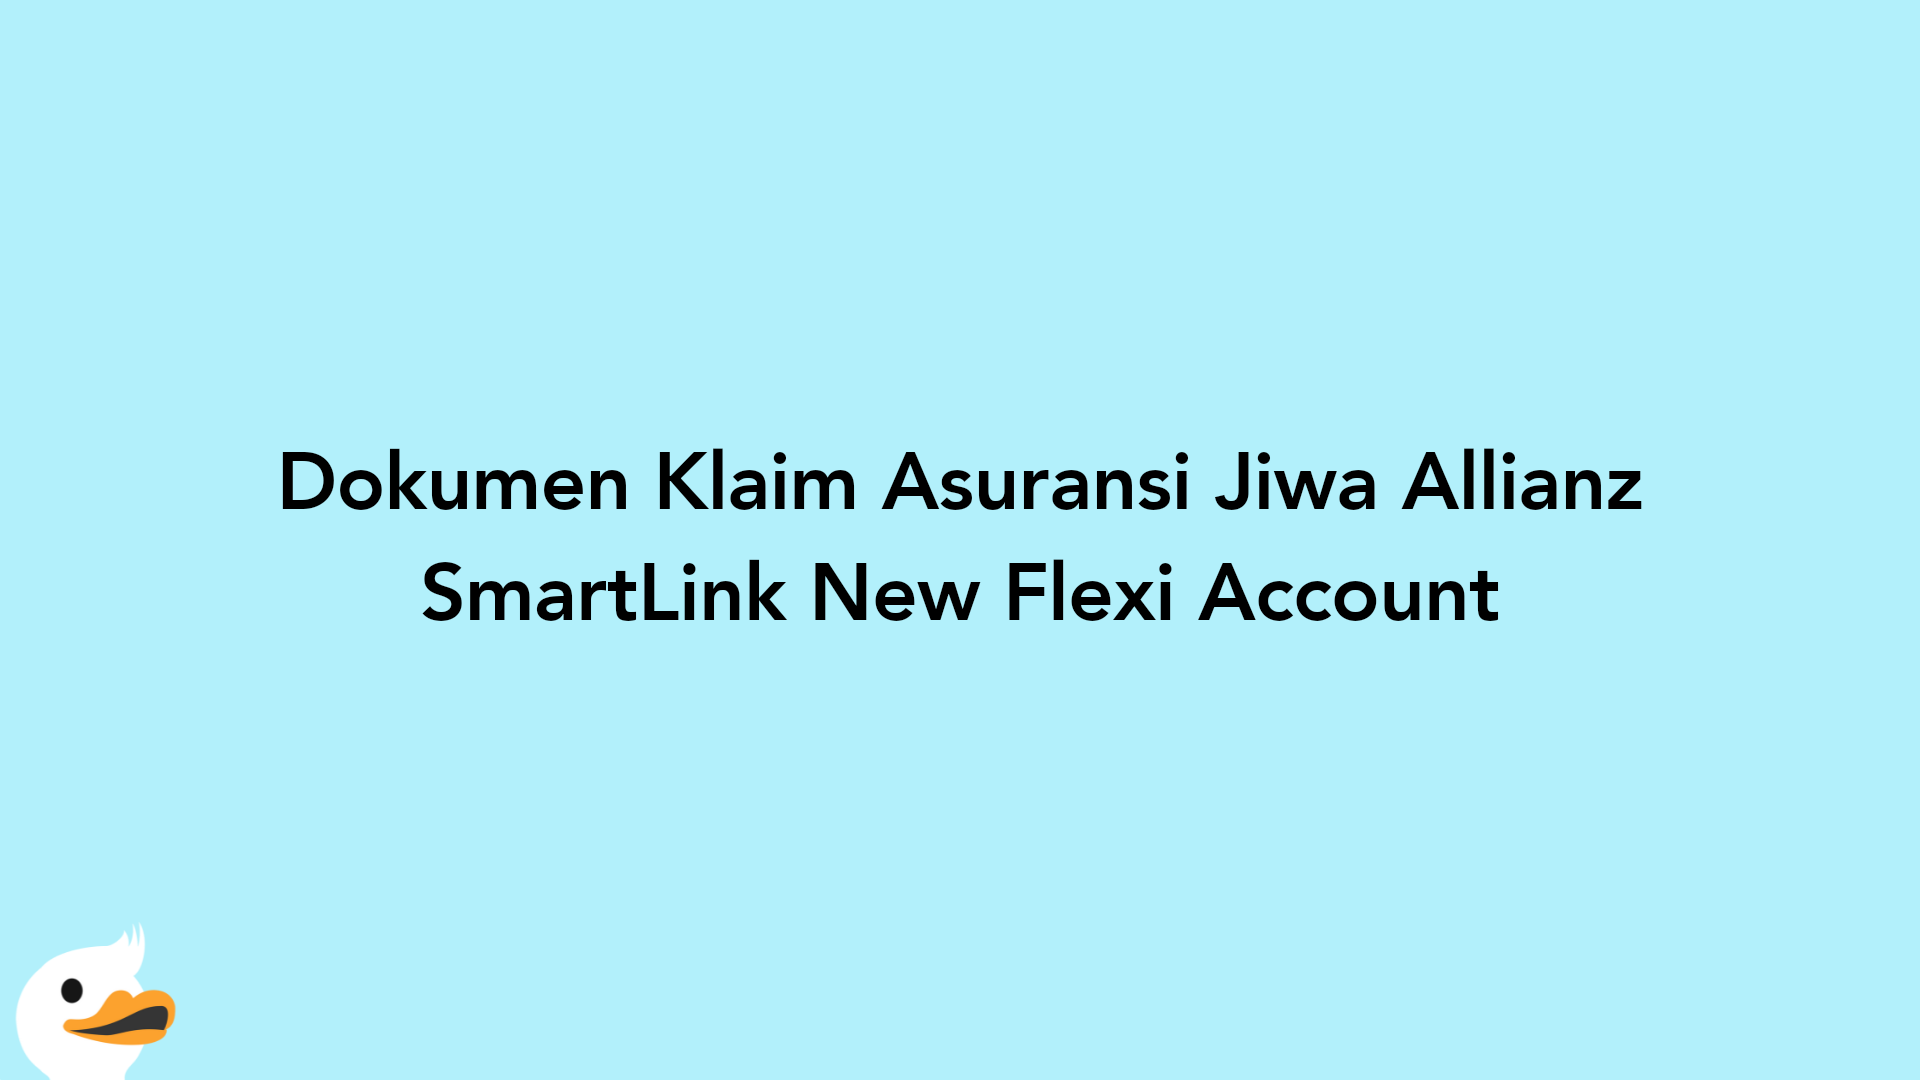 Dokumen Klaim Asuransi Jiwa Allianz SmartLink New Flexi Account